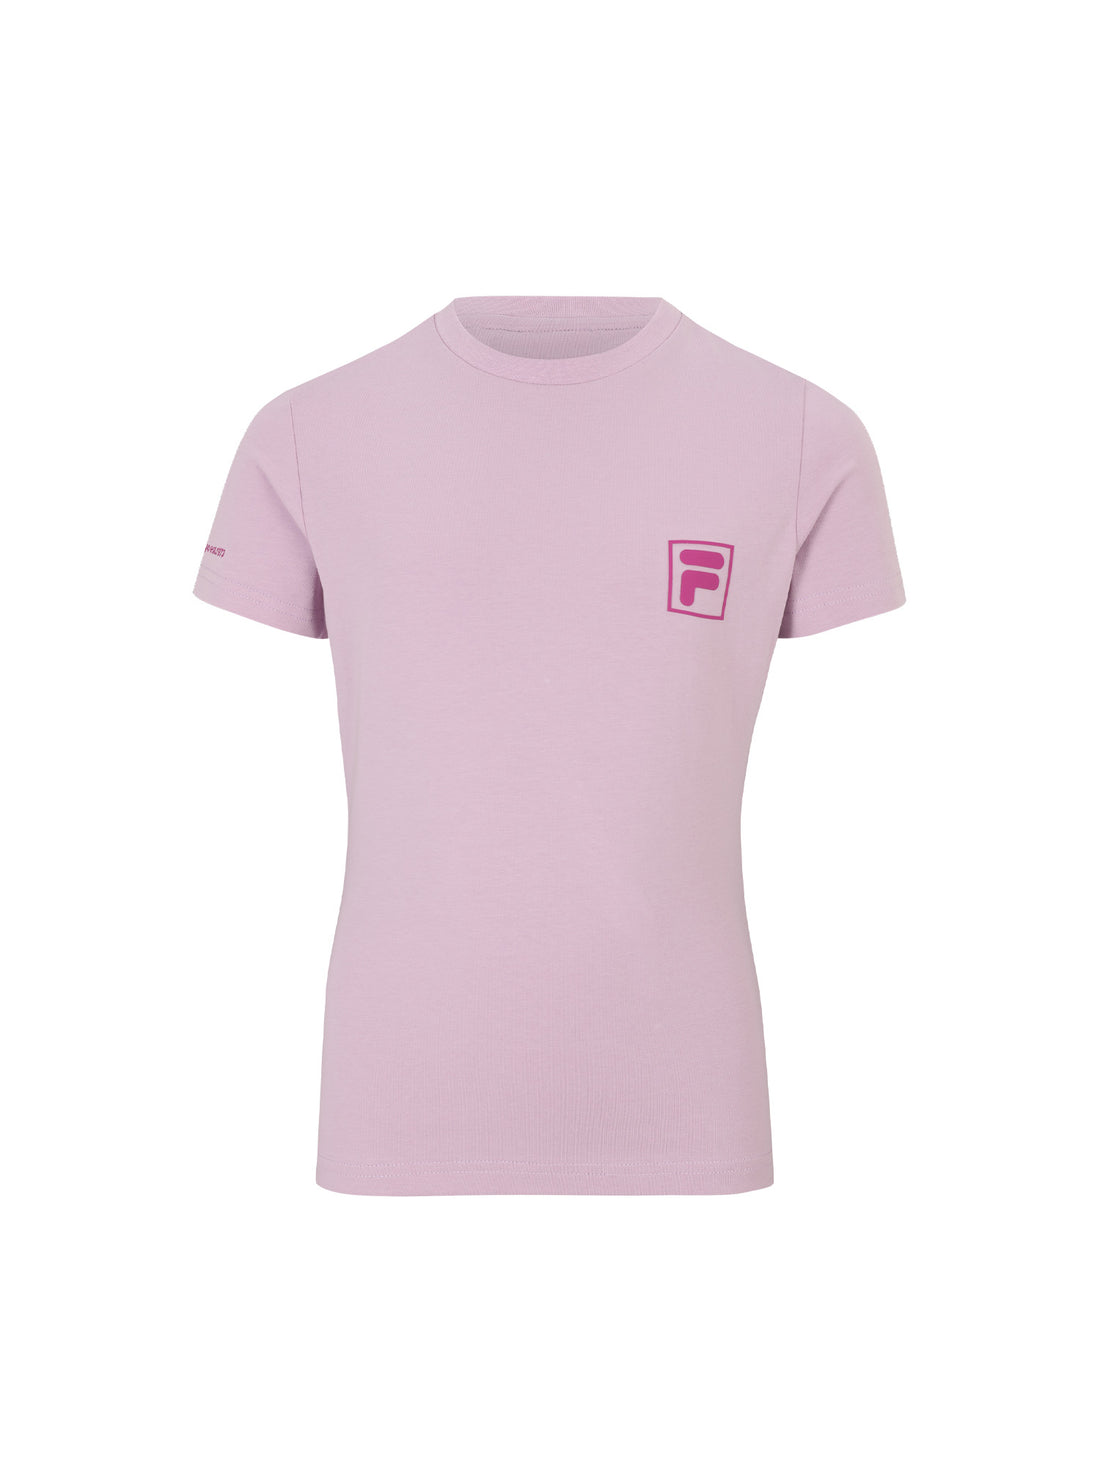 T-shirt Rosa Fila